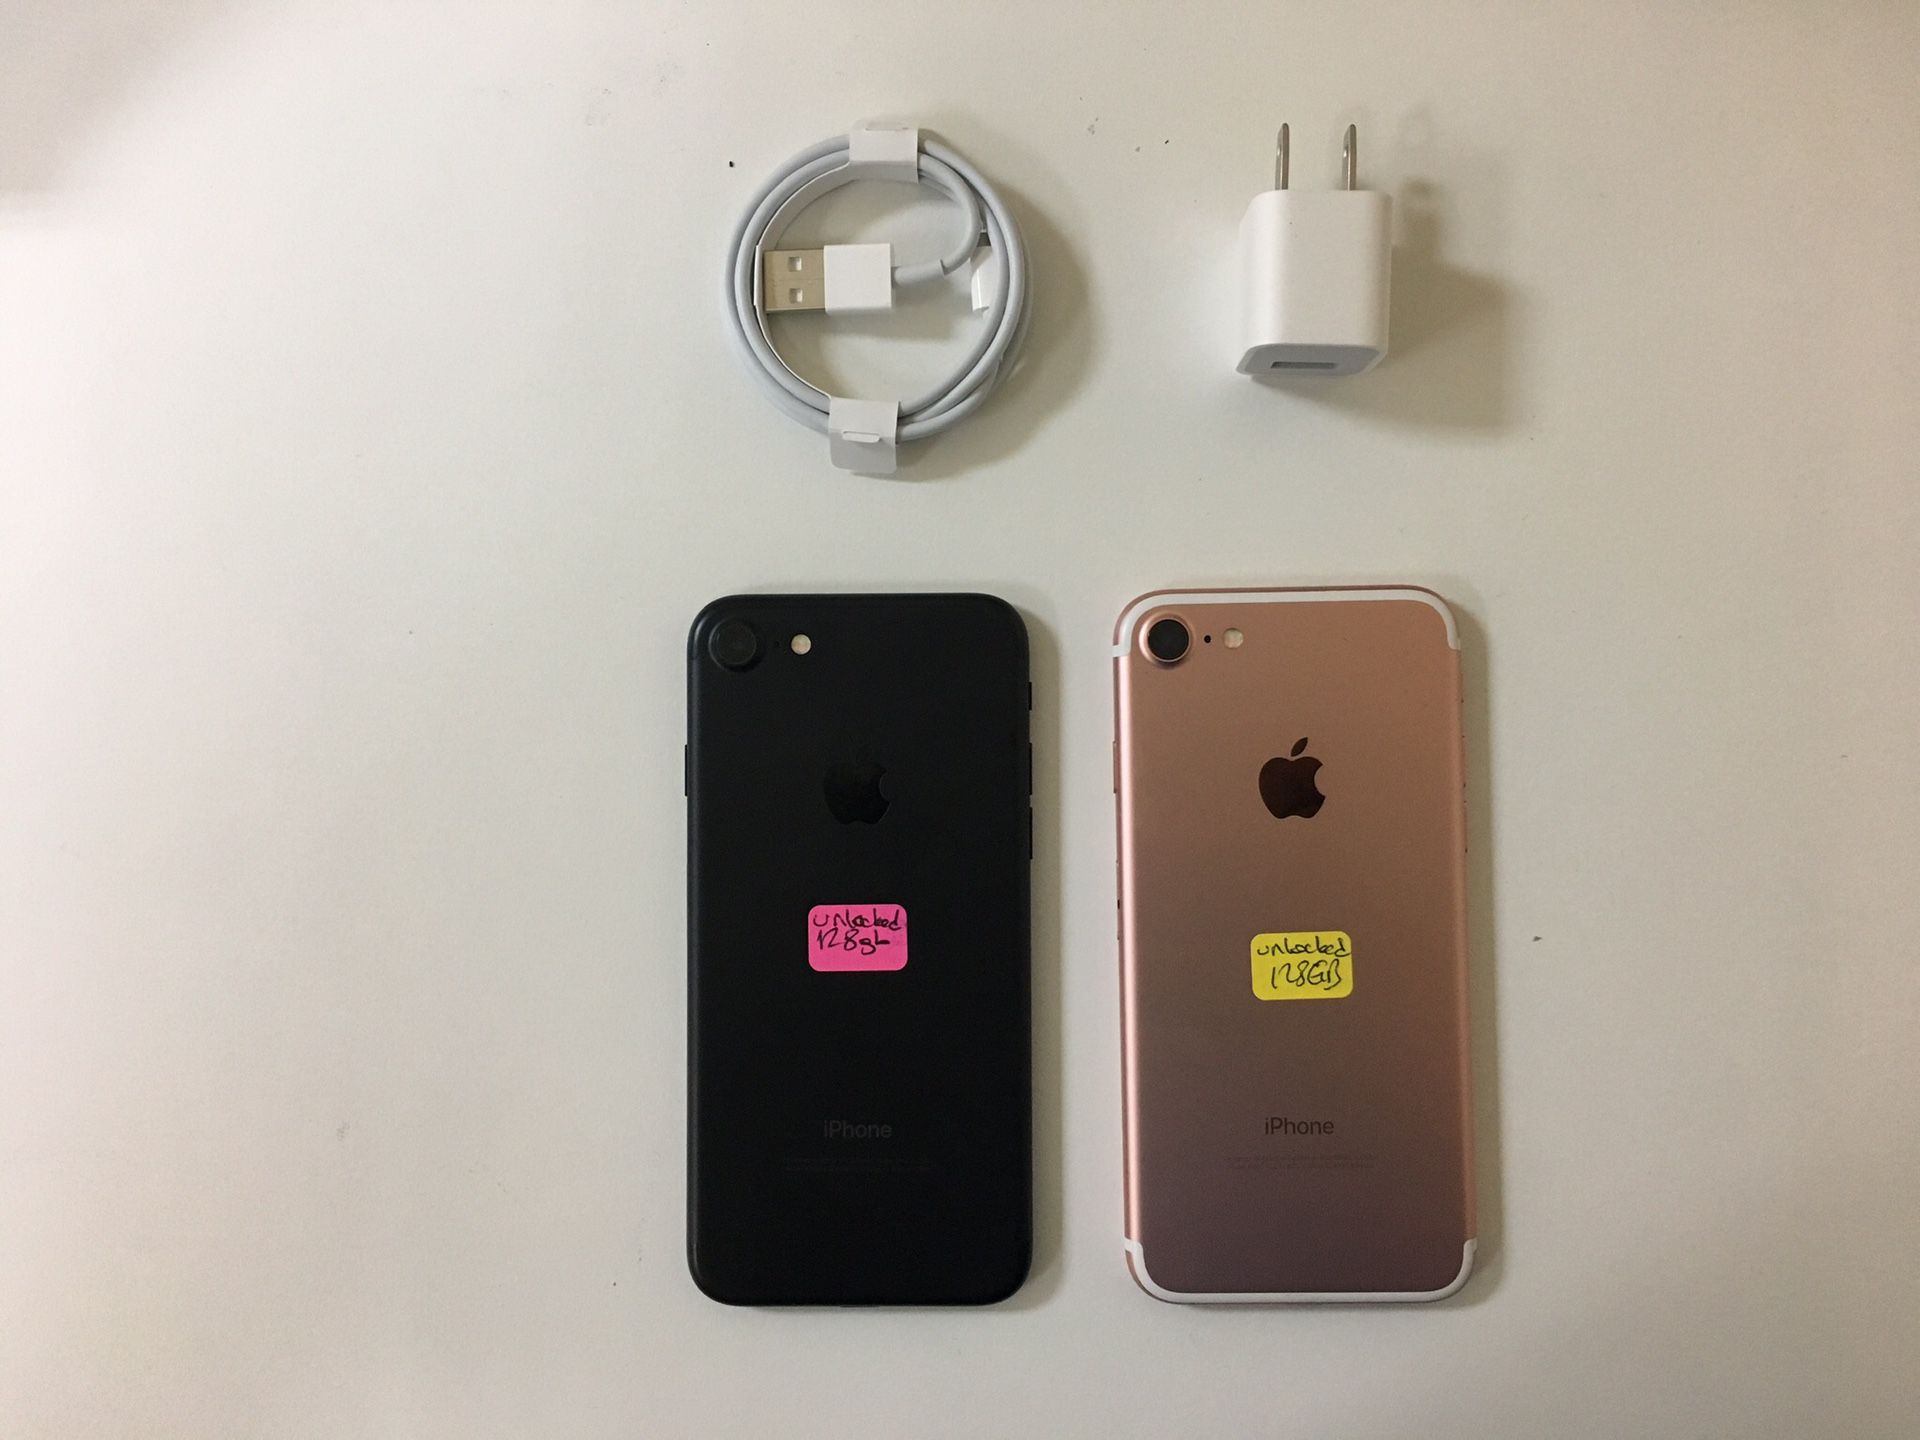 iPhone 7 128gb factory unlocked, iphone AT&T, T-Mobile,Cricket Metro pcs, Verizon, Straight talk Simple mobile, unlocked, iPhone